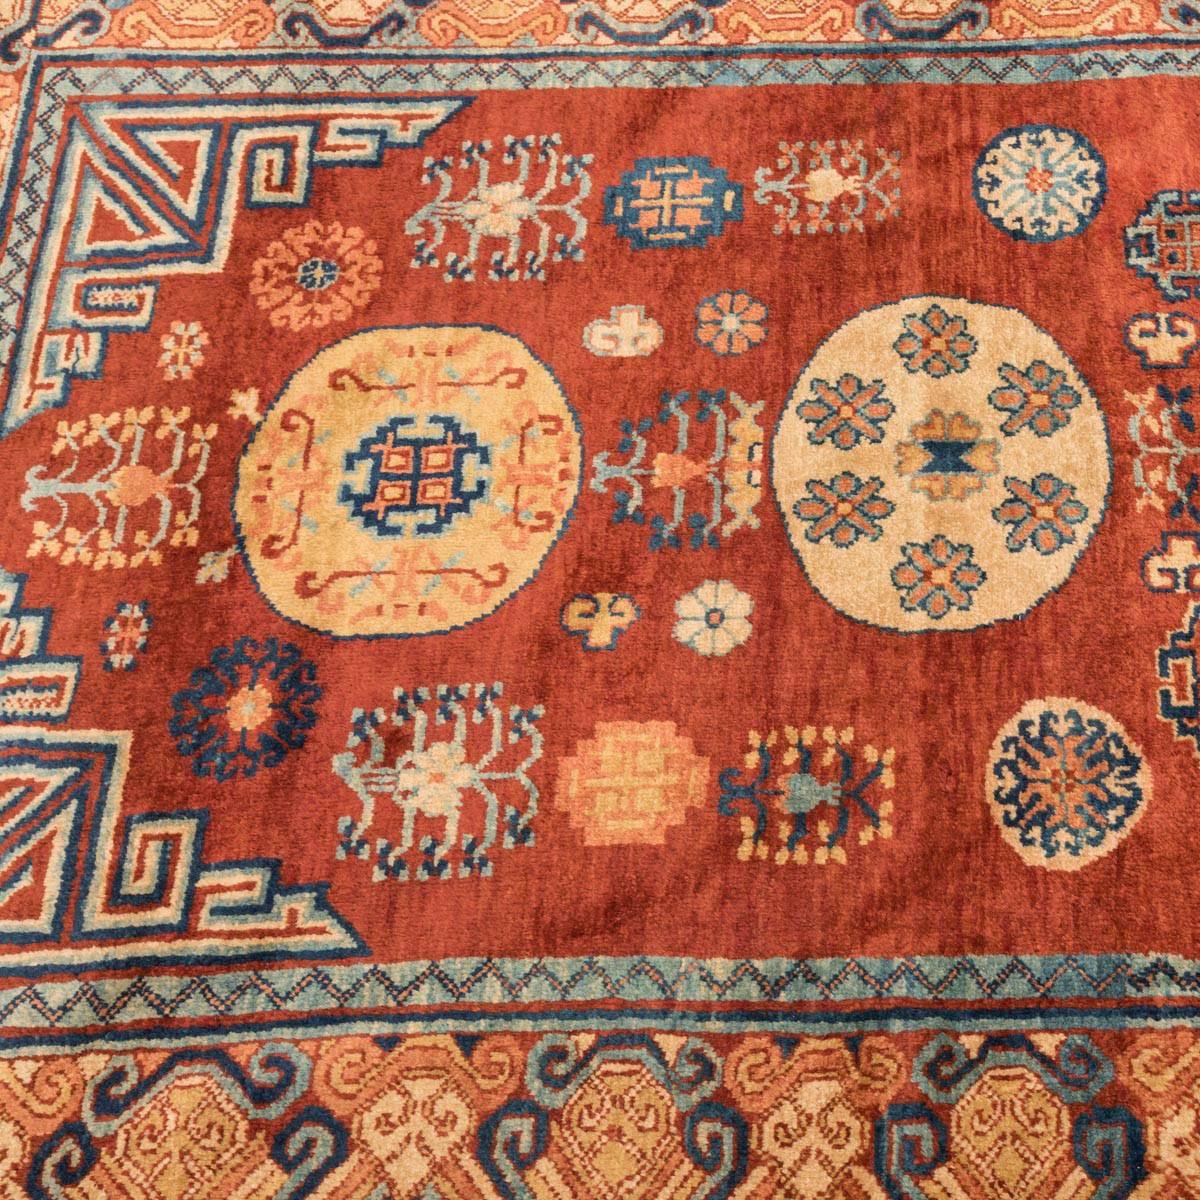 Turkestan 20th Century Samarkand Wool Caramel Color Rug Kothan Design circa 1900. For Sale